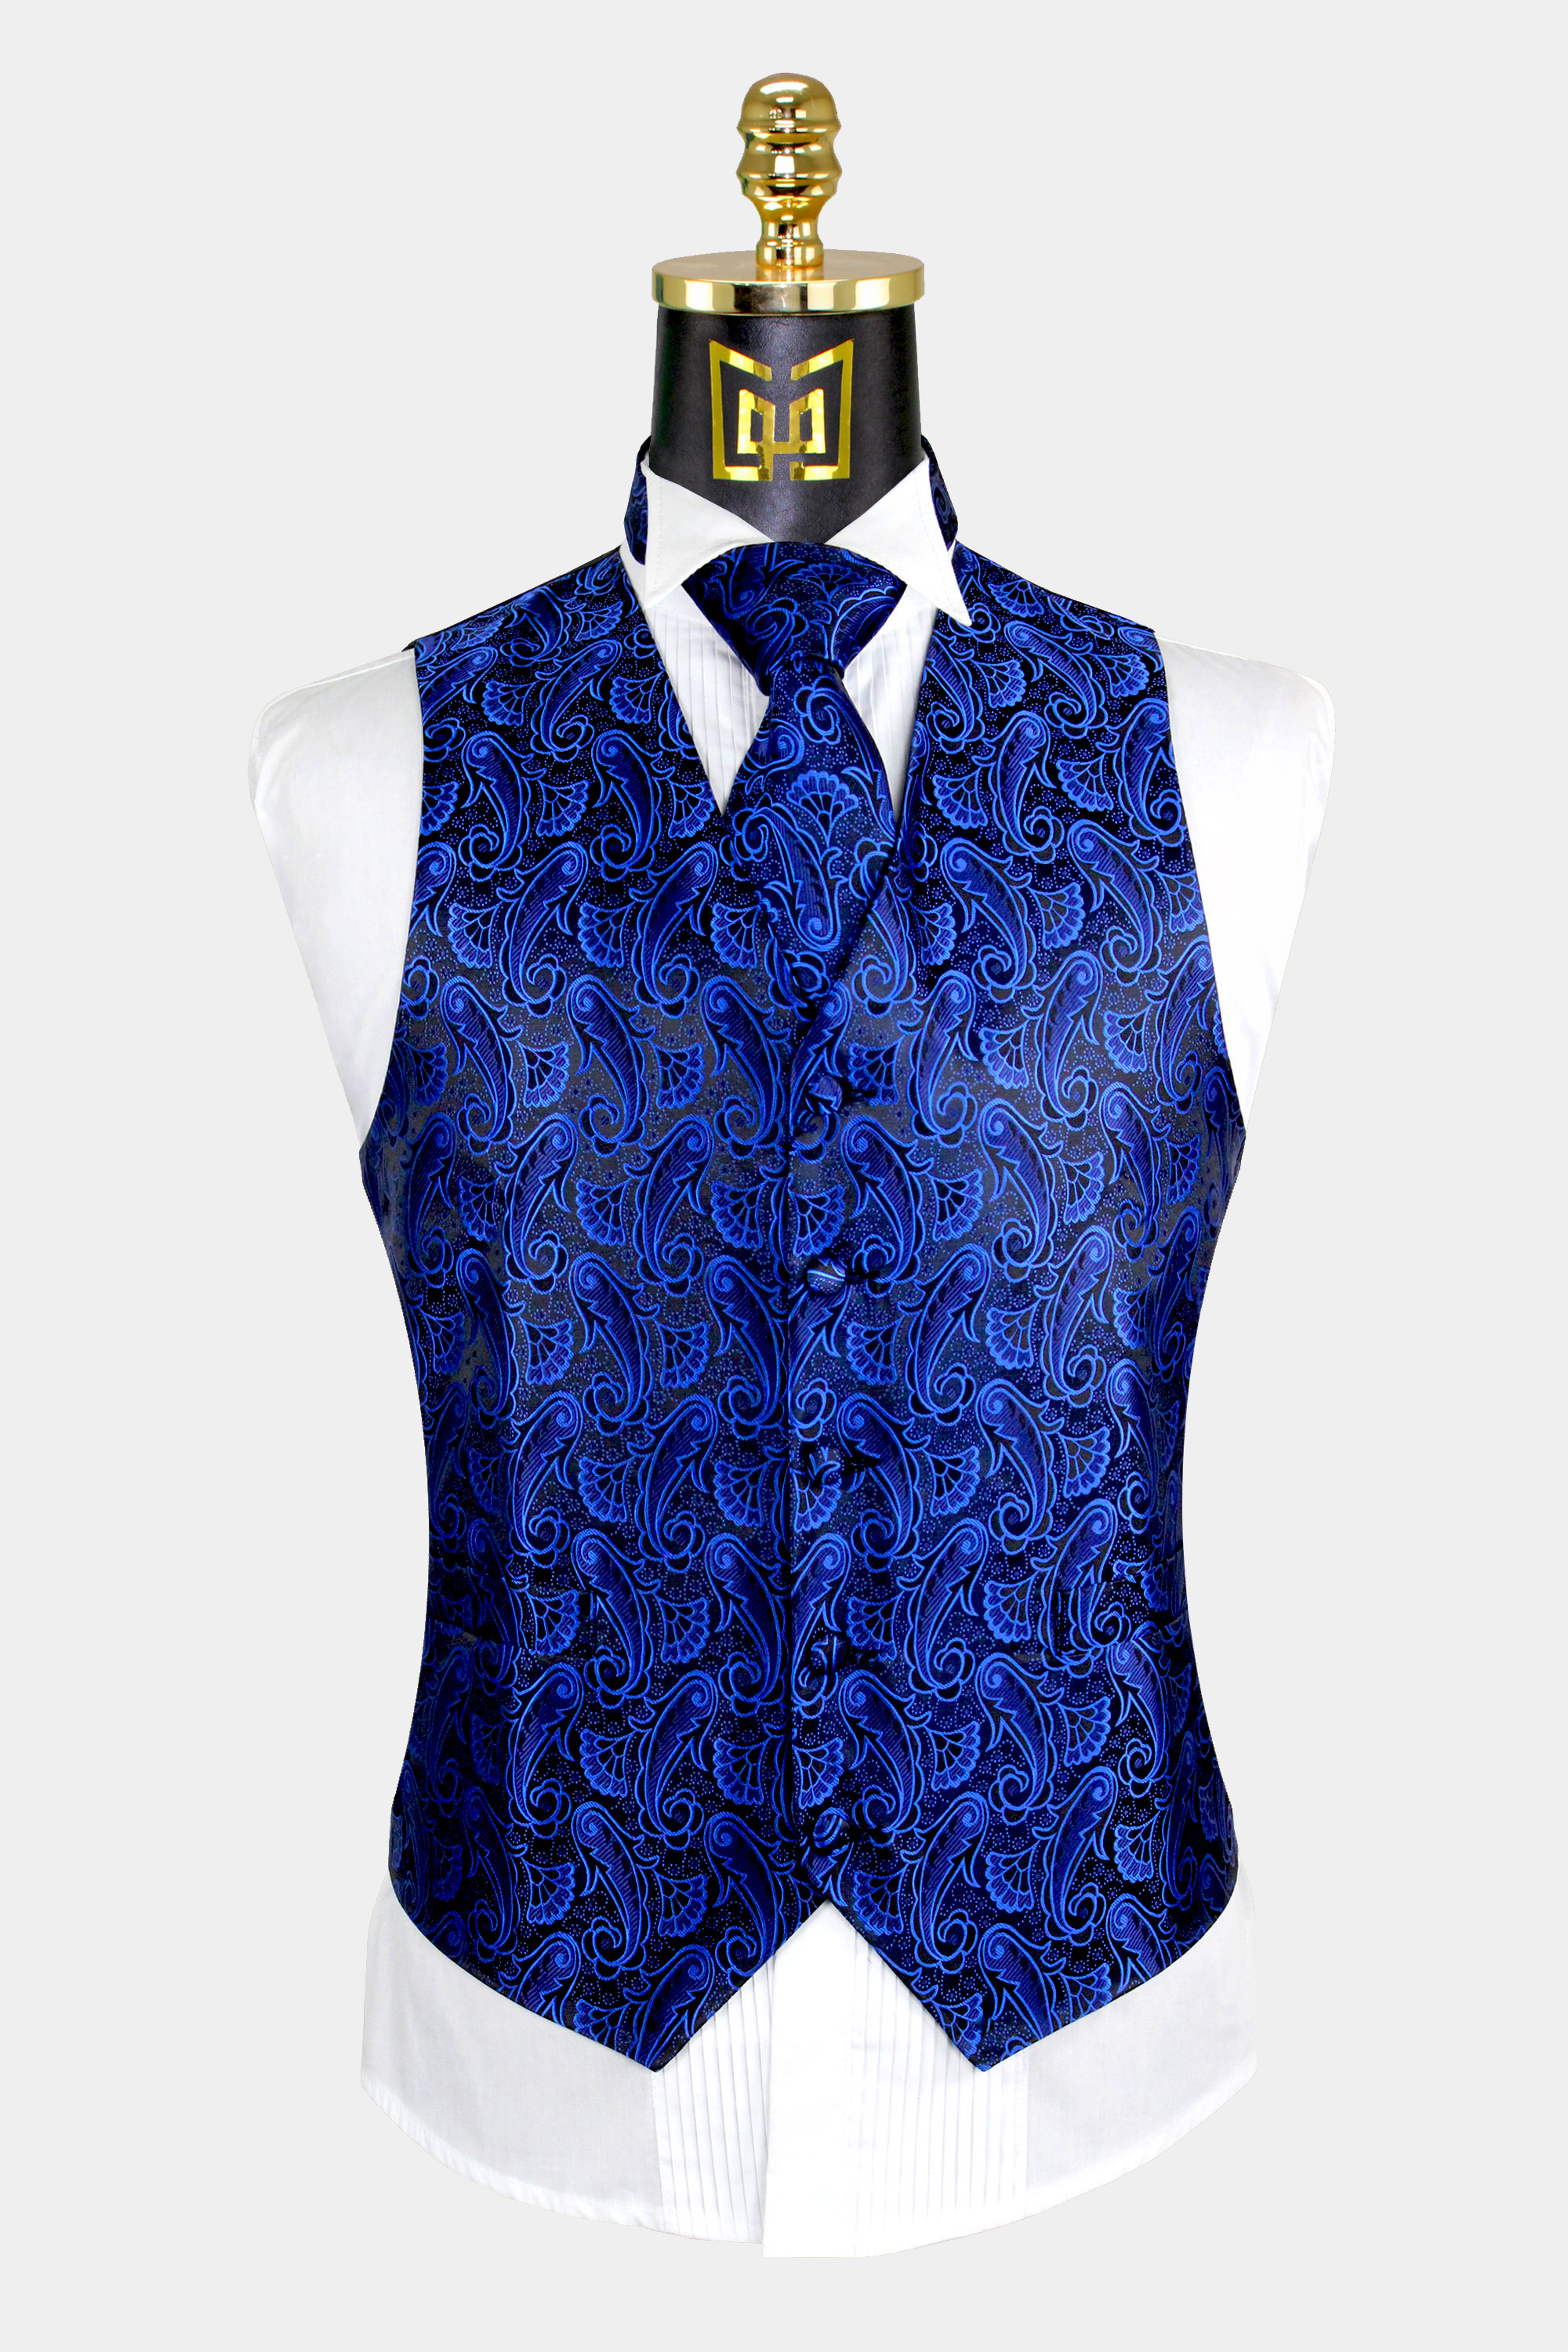 Turquoise Blue XS to 6XL Paisley Tuxedo Suit Dress Vest Waistcoat Wedding Party 